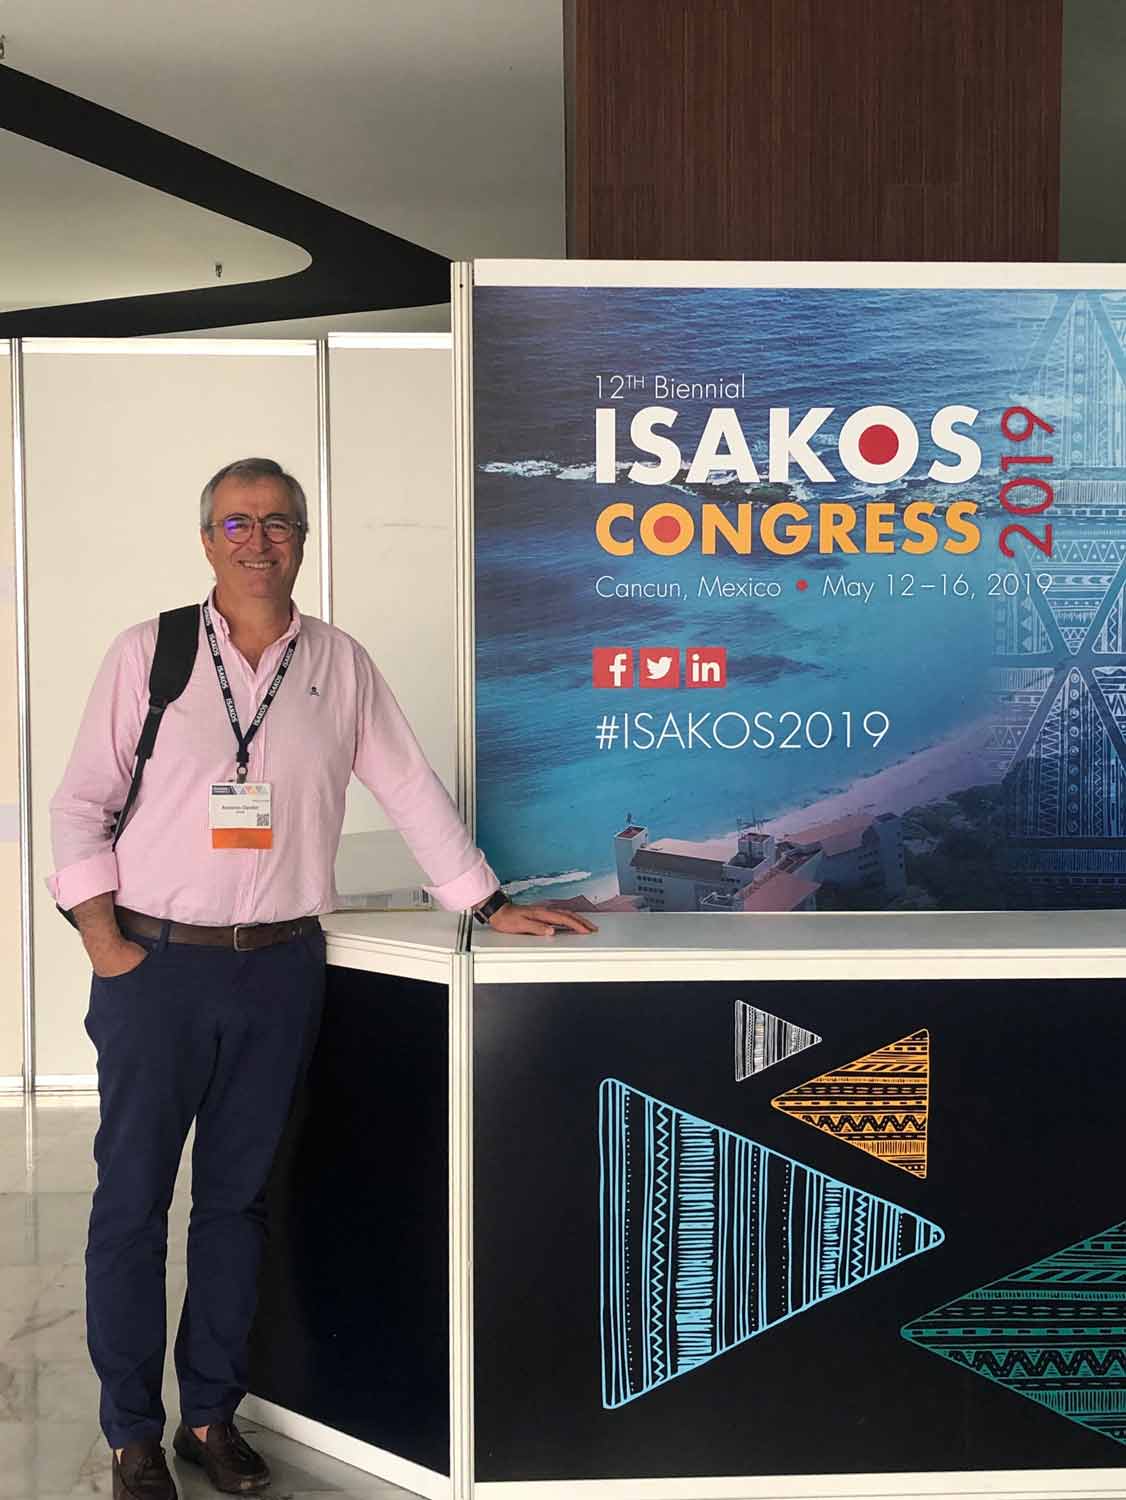 congreso-isakos-cancun-2019-clinica-darder-01